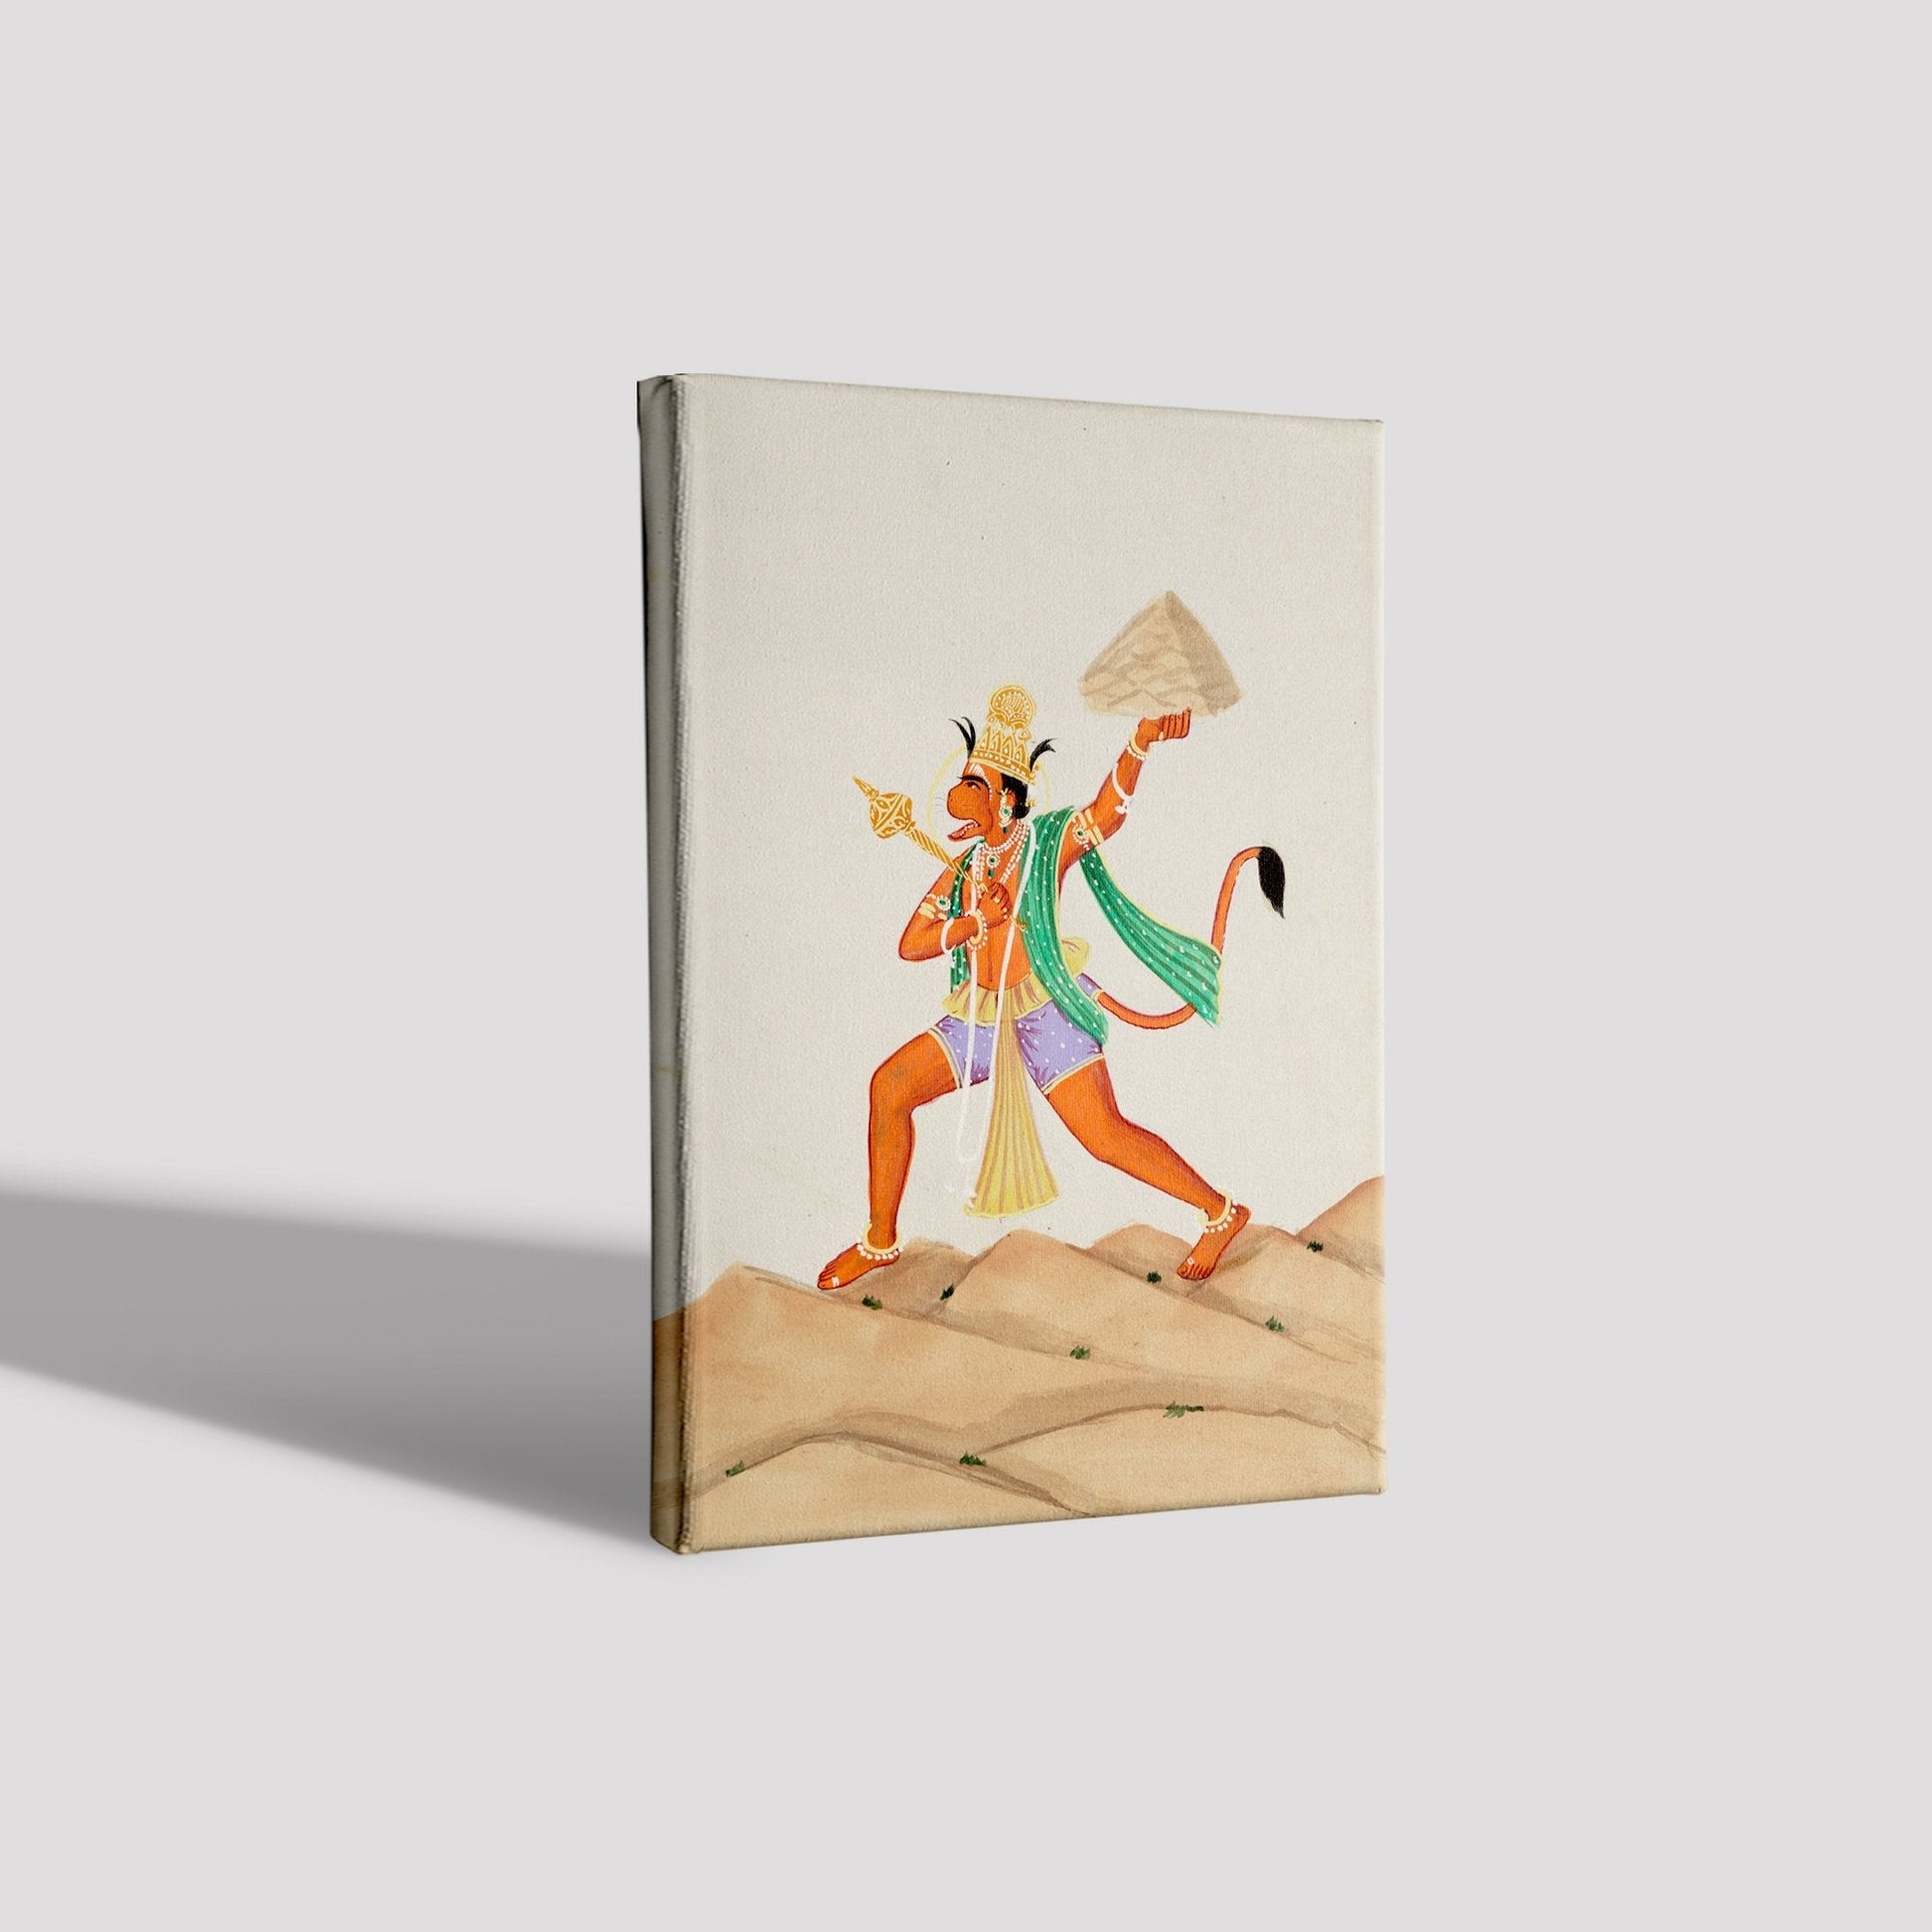 Hanuman carrying the mountain Painting - Meri Deewar - MeriDeewar